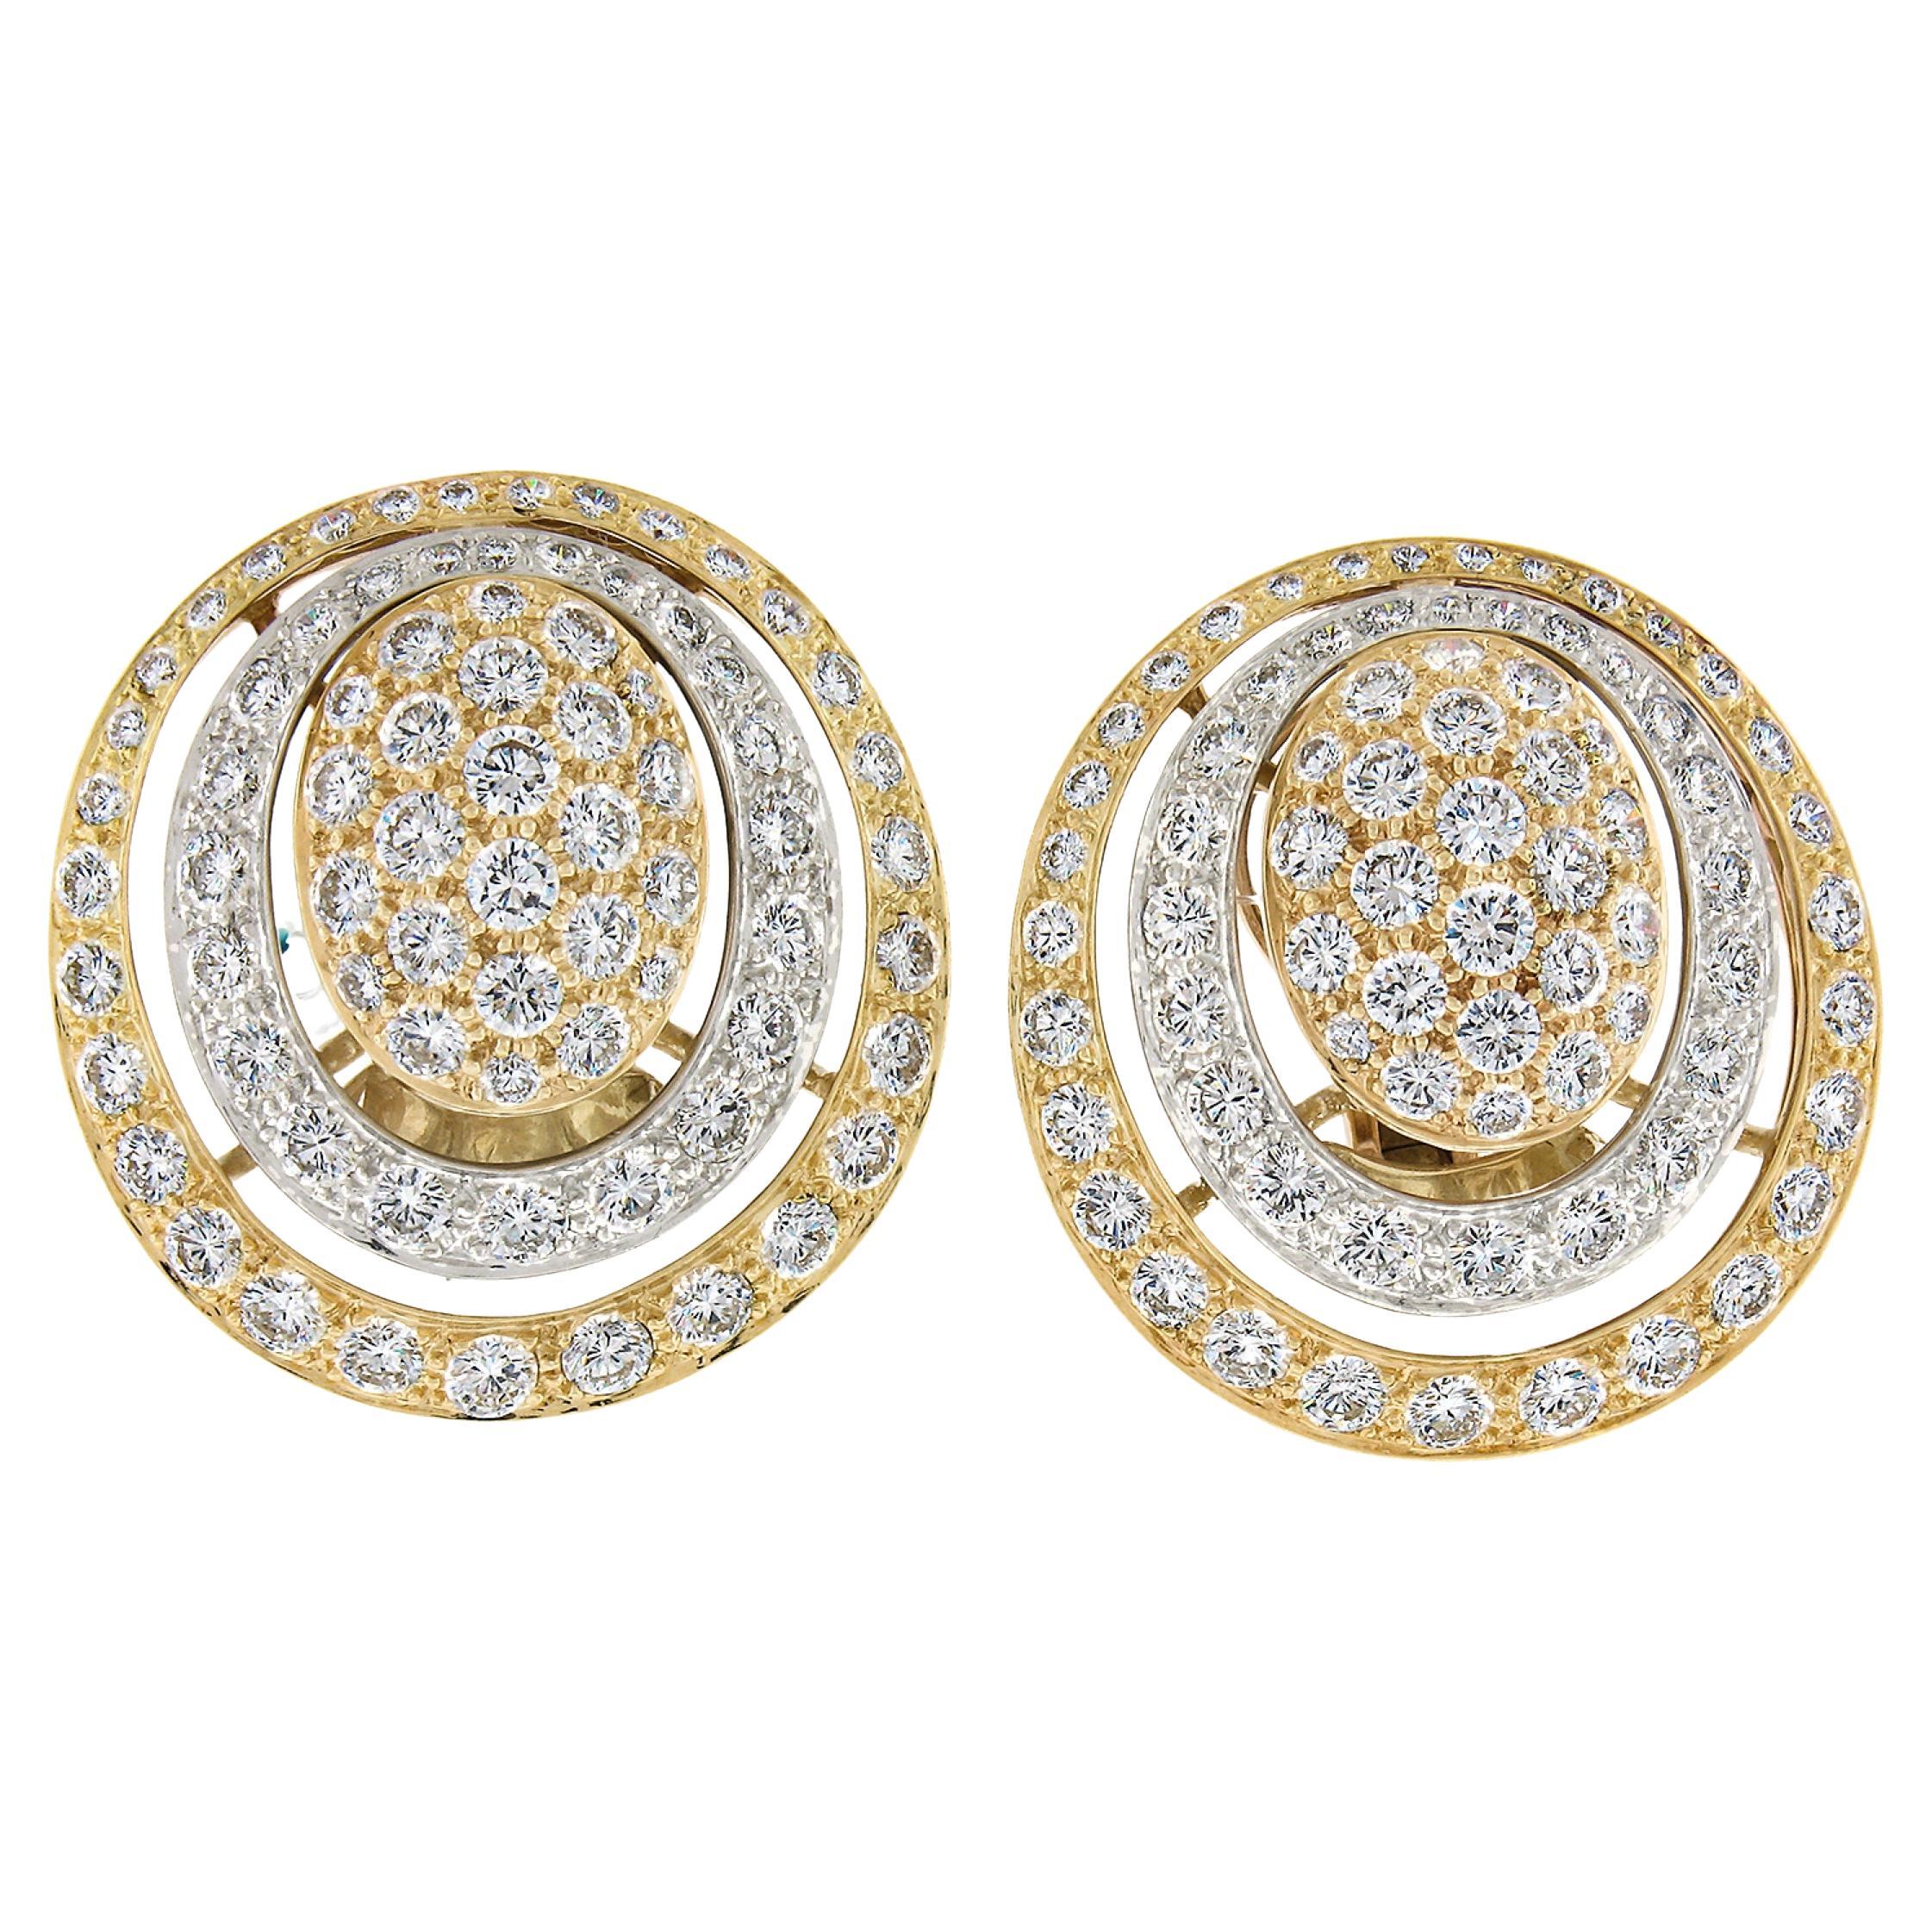 Hammerman Bros 18k Gold & Platinum 12.90ctw Diamond Large Open Circles Earrings